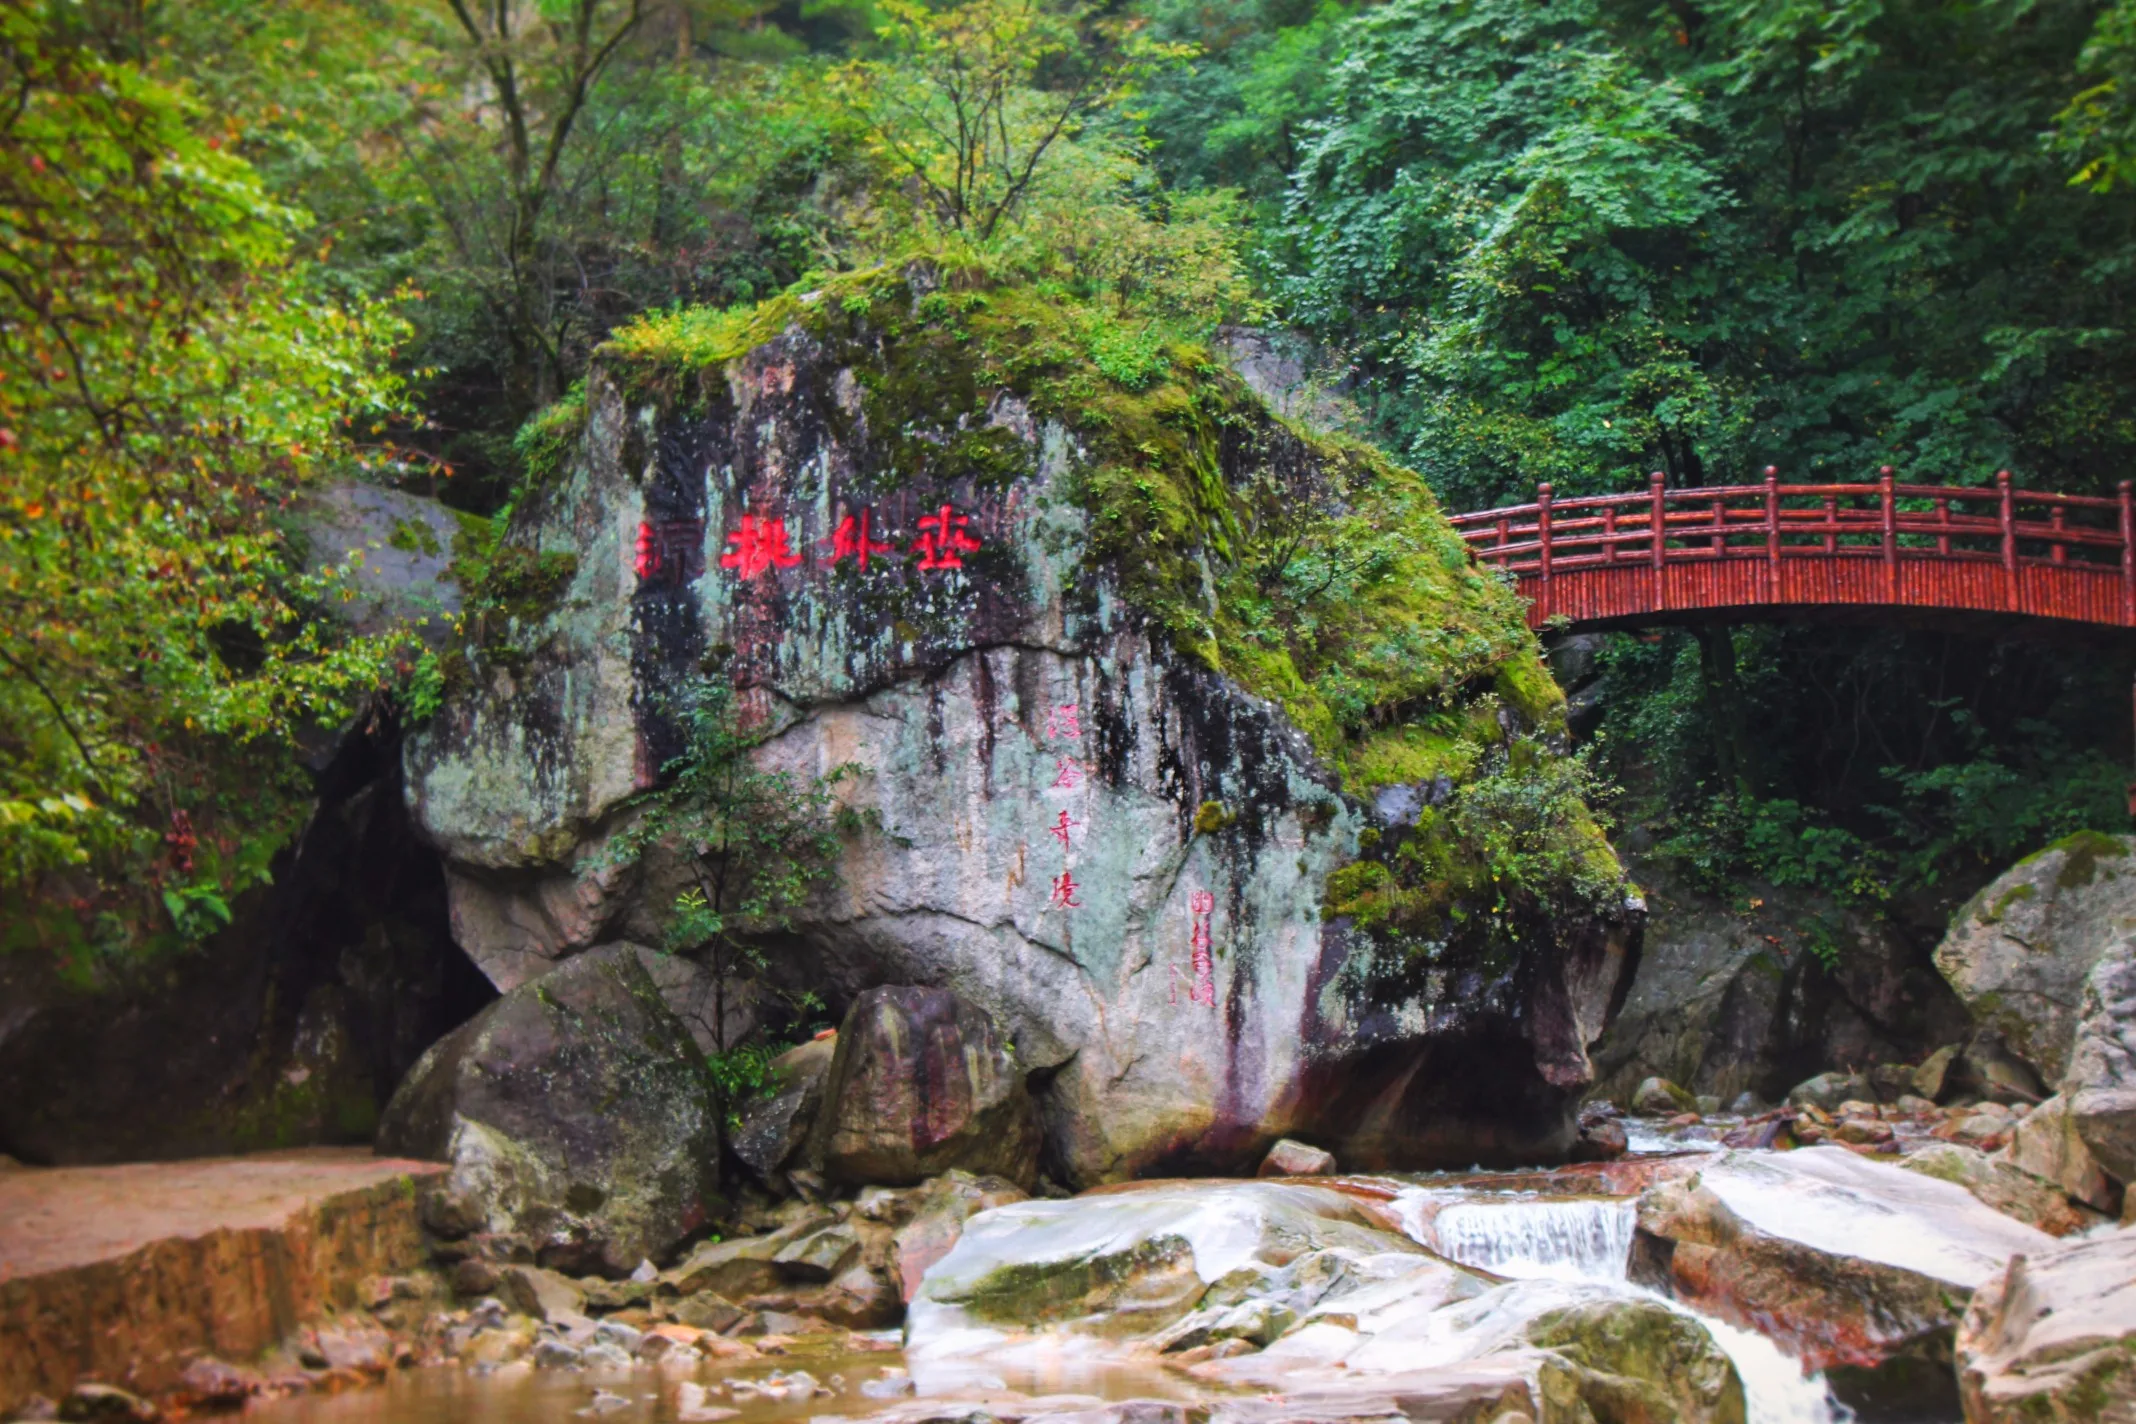 Red Footbridge and River at Taibai Mountain National Park 1